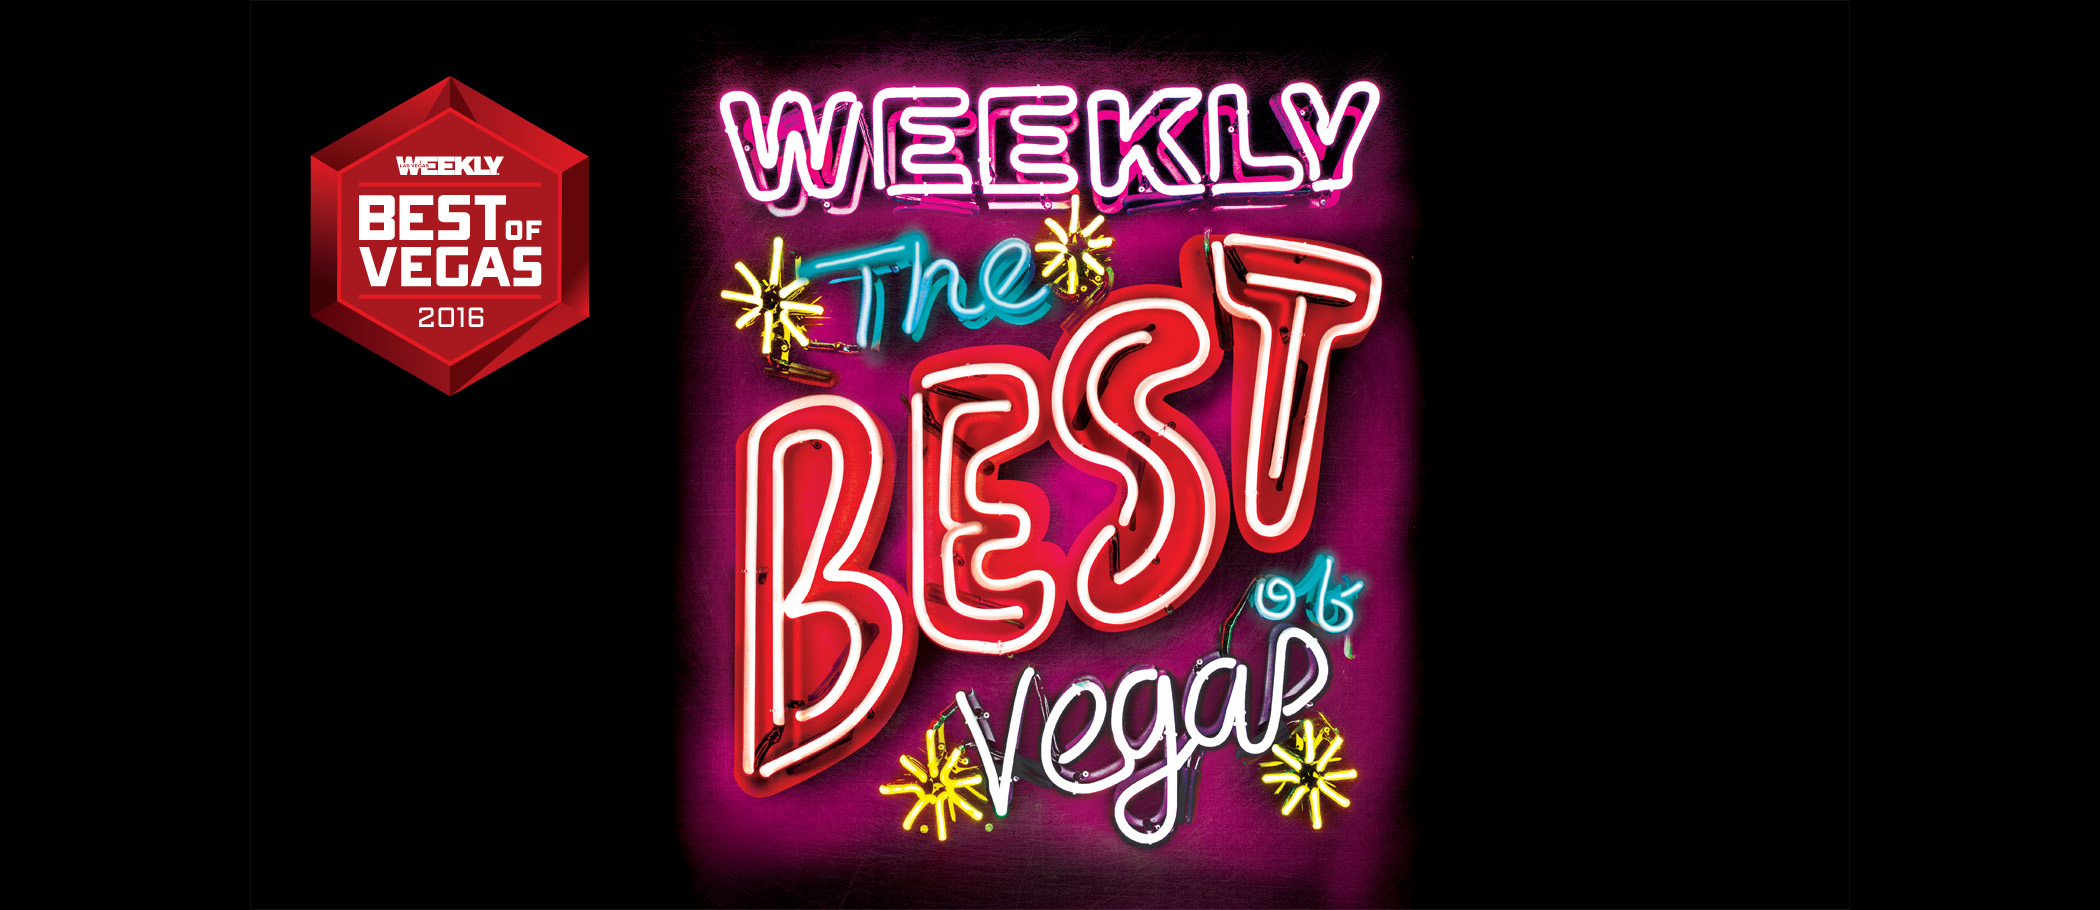 Best of Vegas 2016